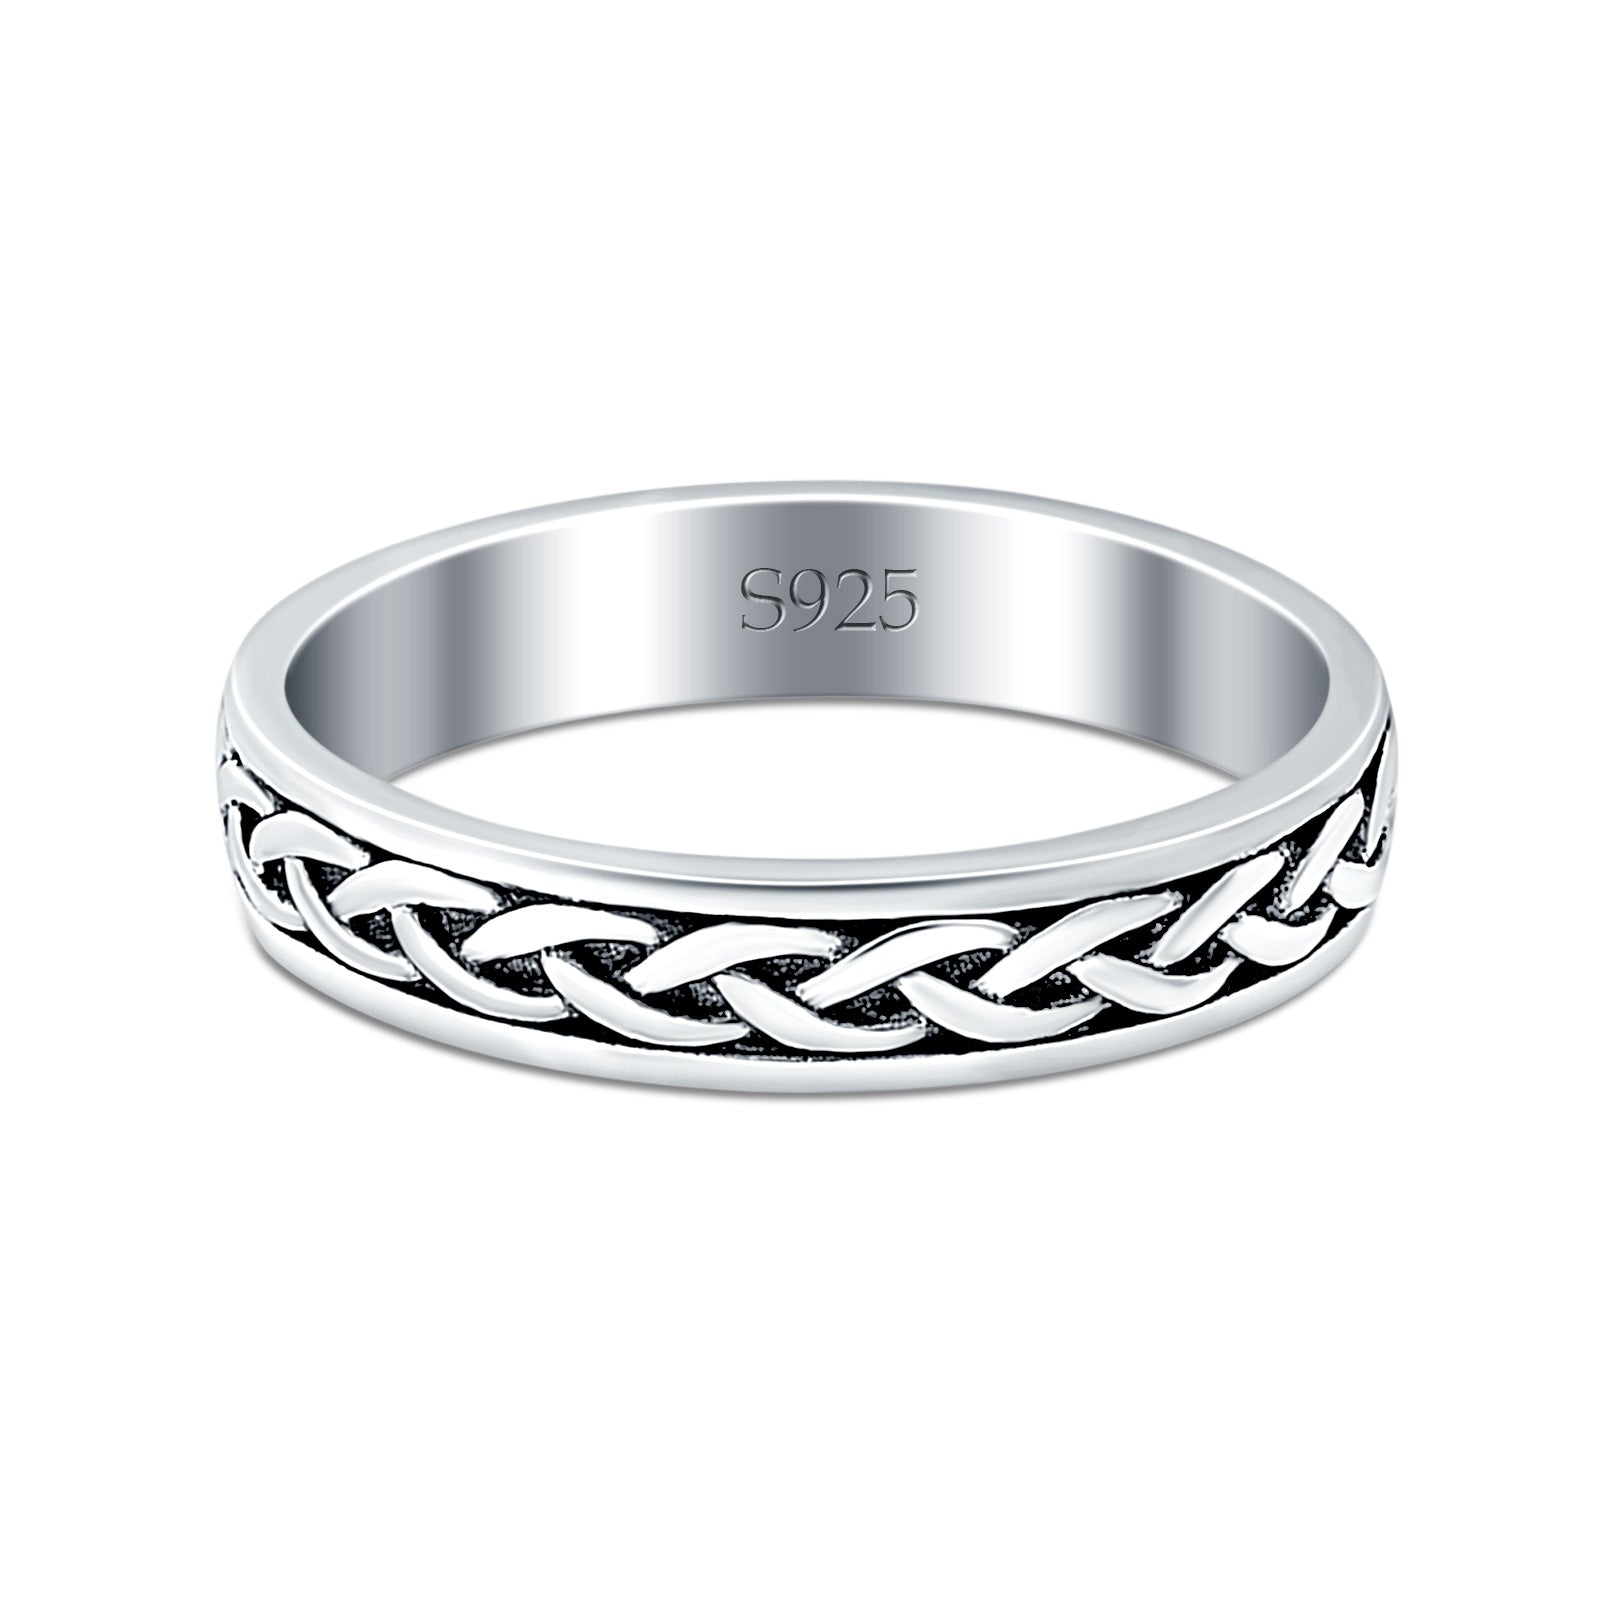 sterling silver thumb ring adjustable with swirls - handmade | eBay